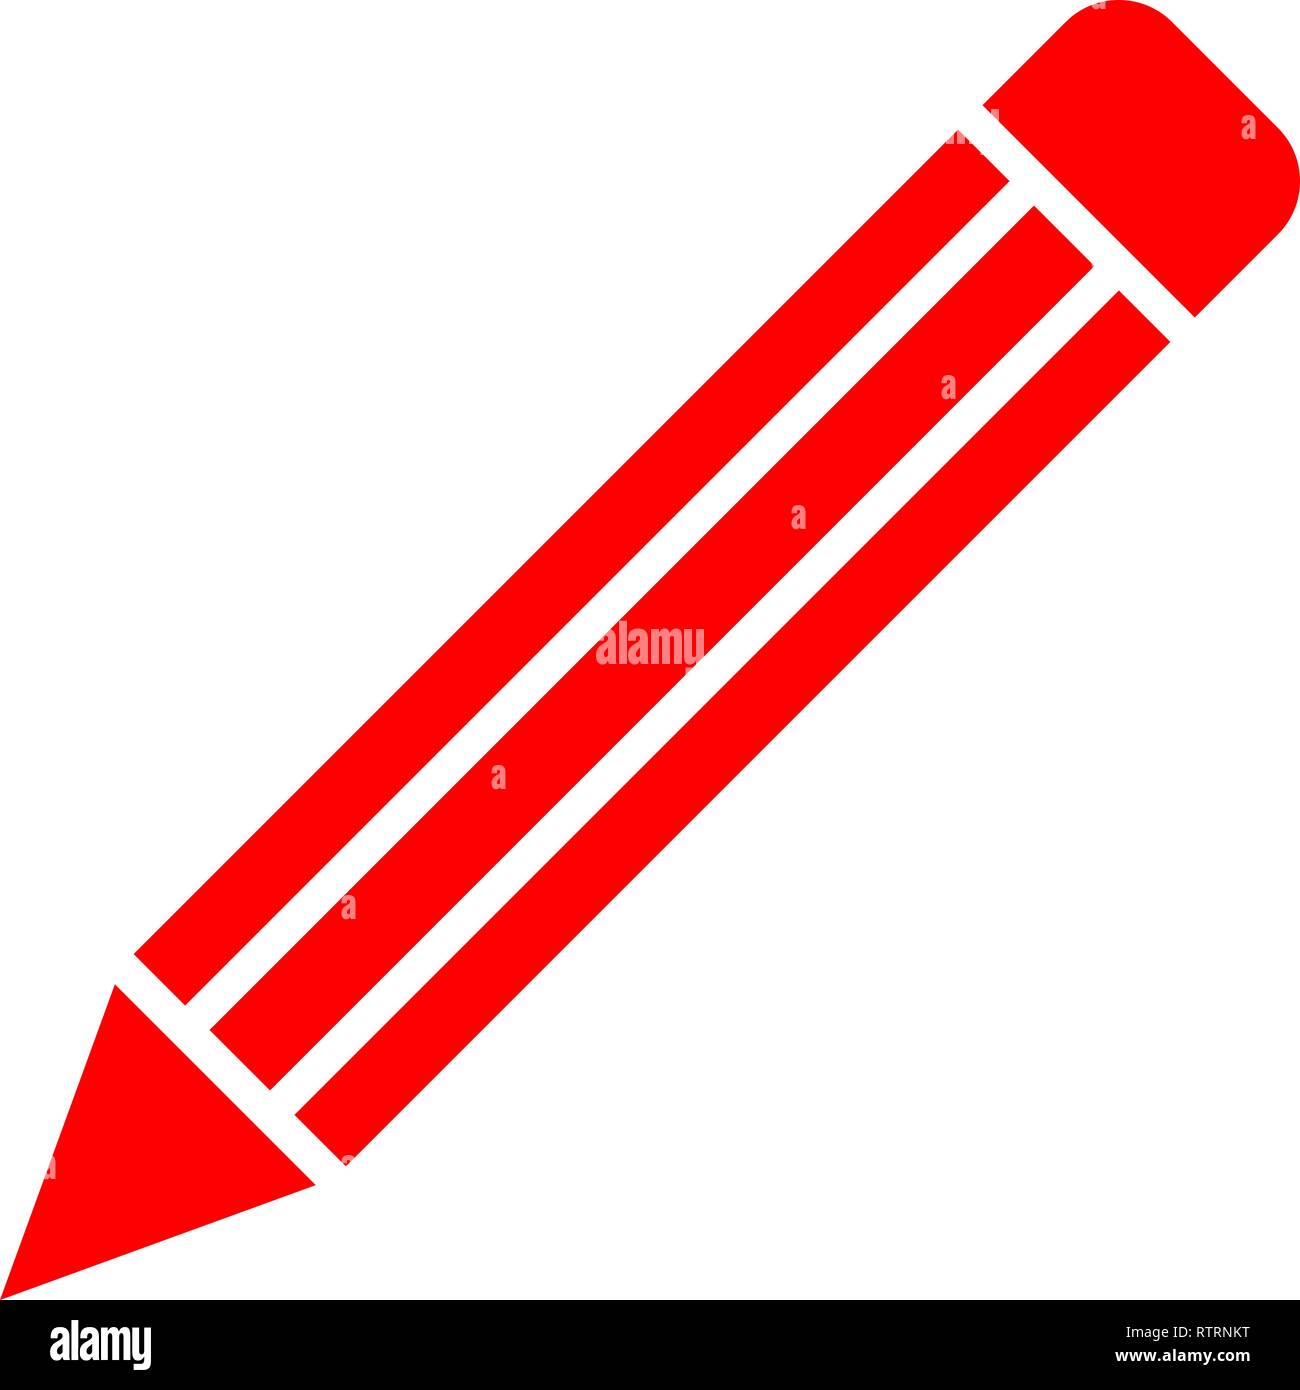 Big Pencil Vector Art image - Free stock photo - Public Domain photo - CC0  Images